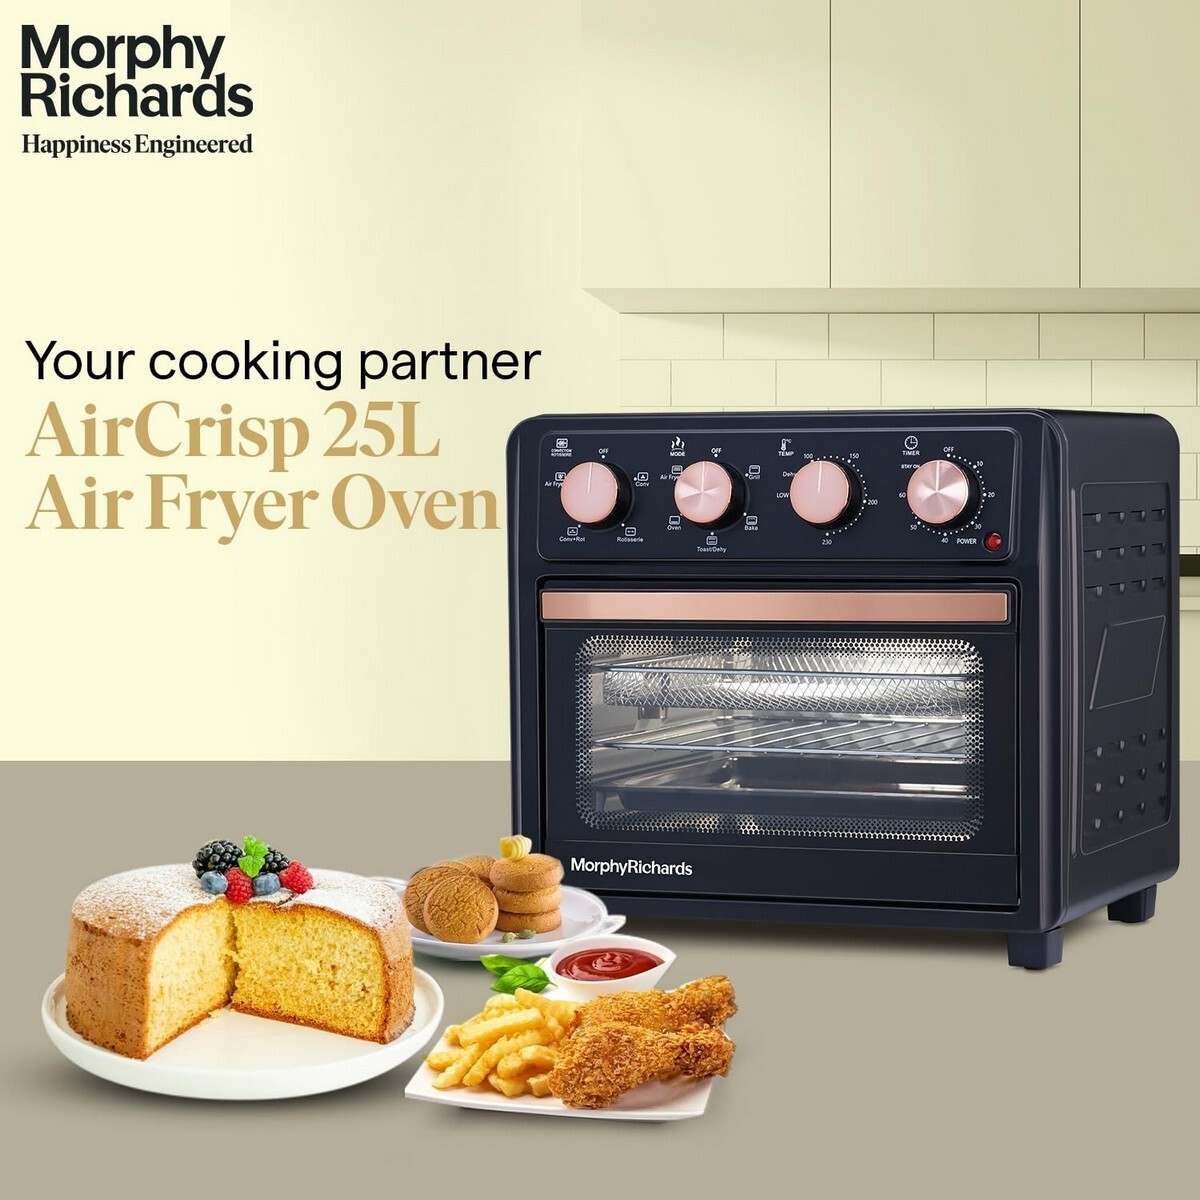 Morphy Richards AirCrisp 25L Air Fryer Oven